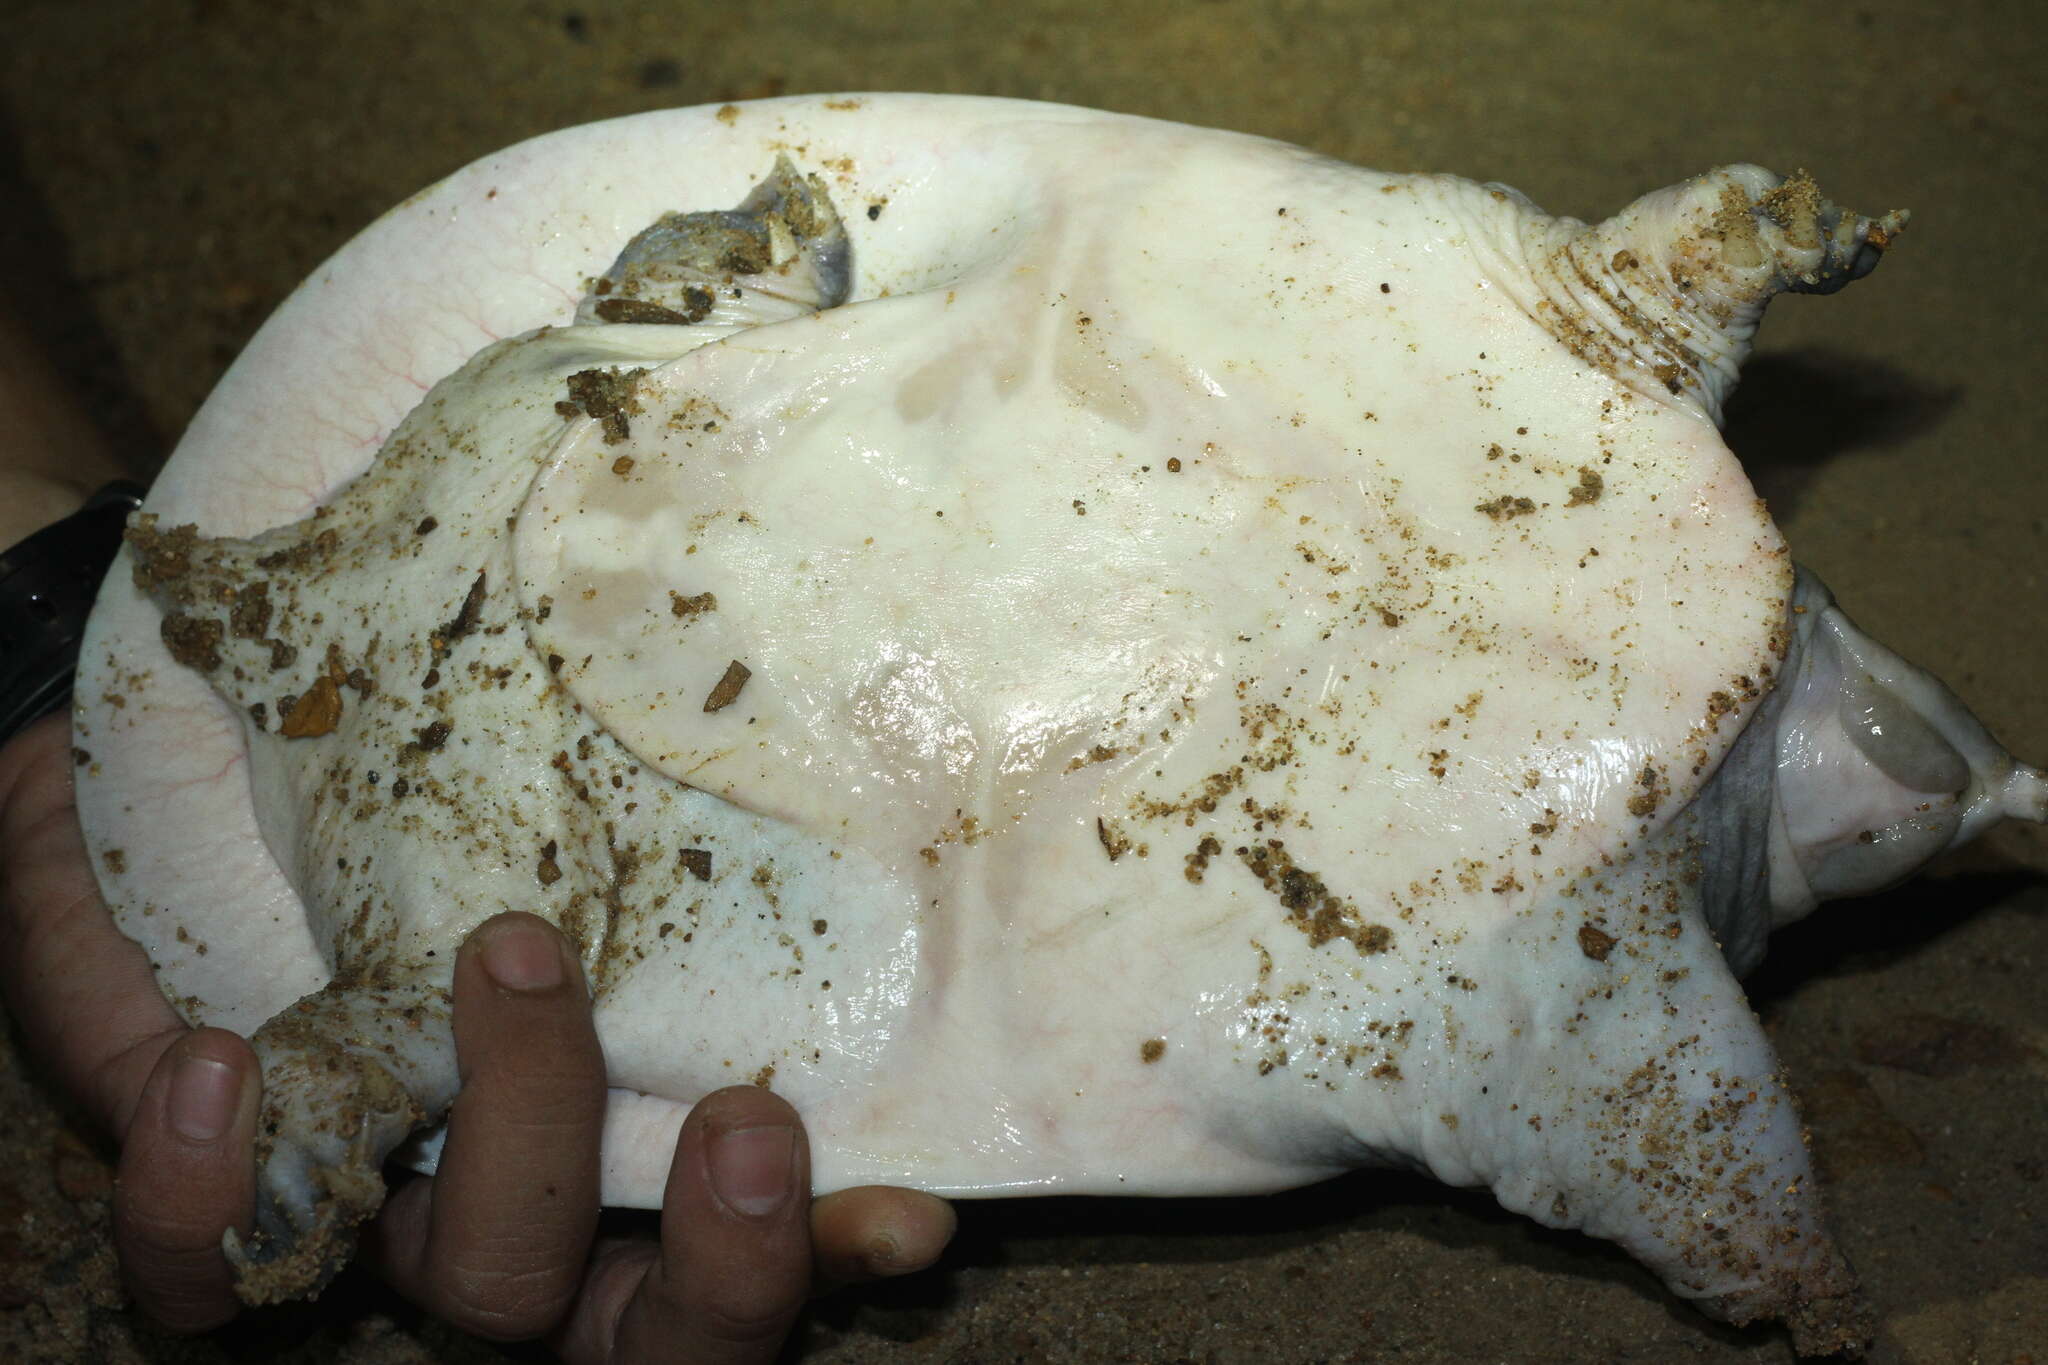 Image of Malayan Soft-shelled Turtle